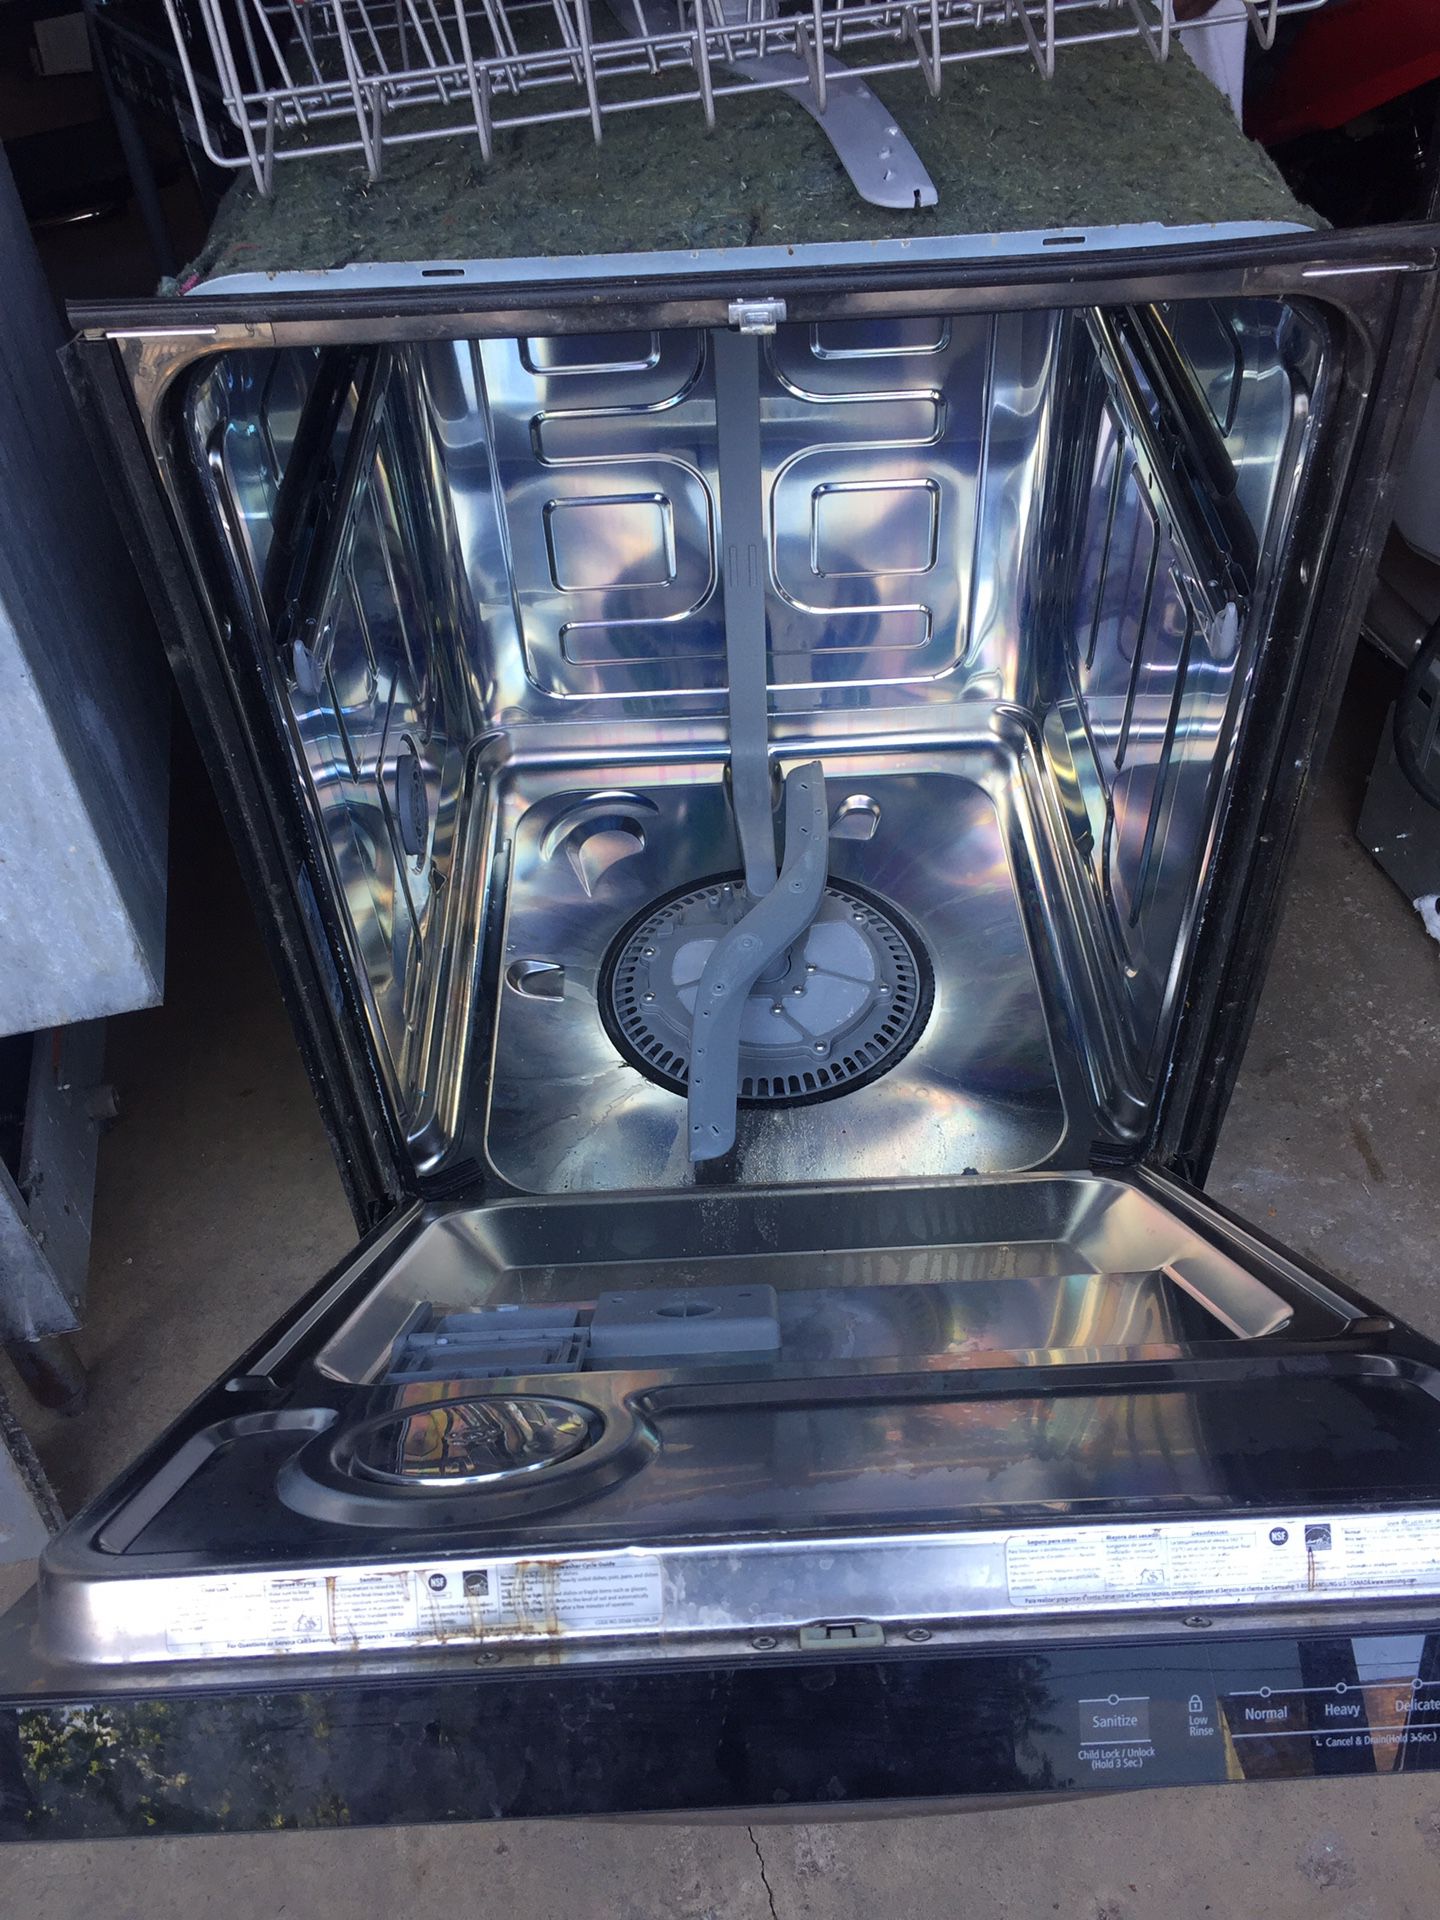 Stainless Steel dishwasher